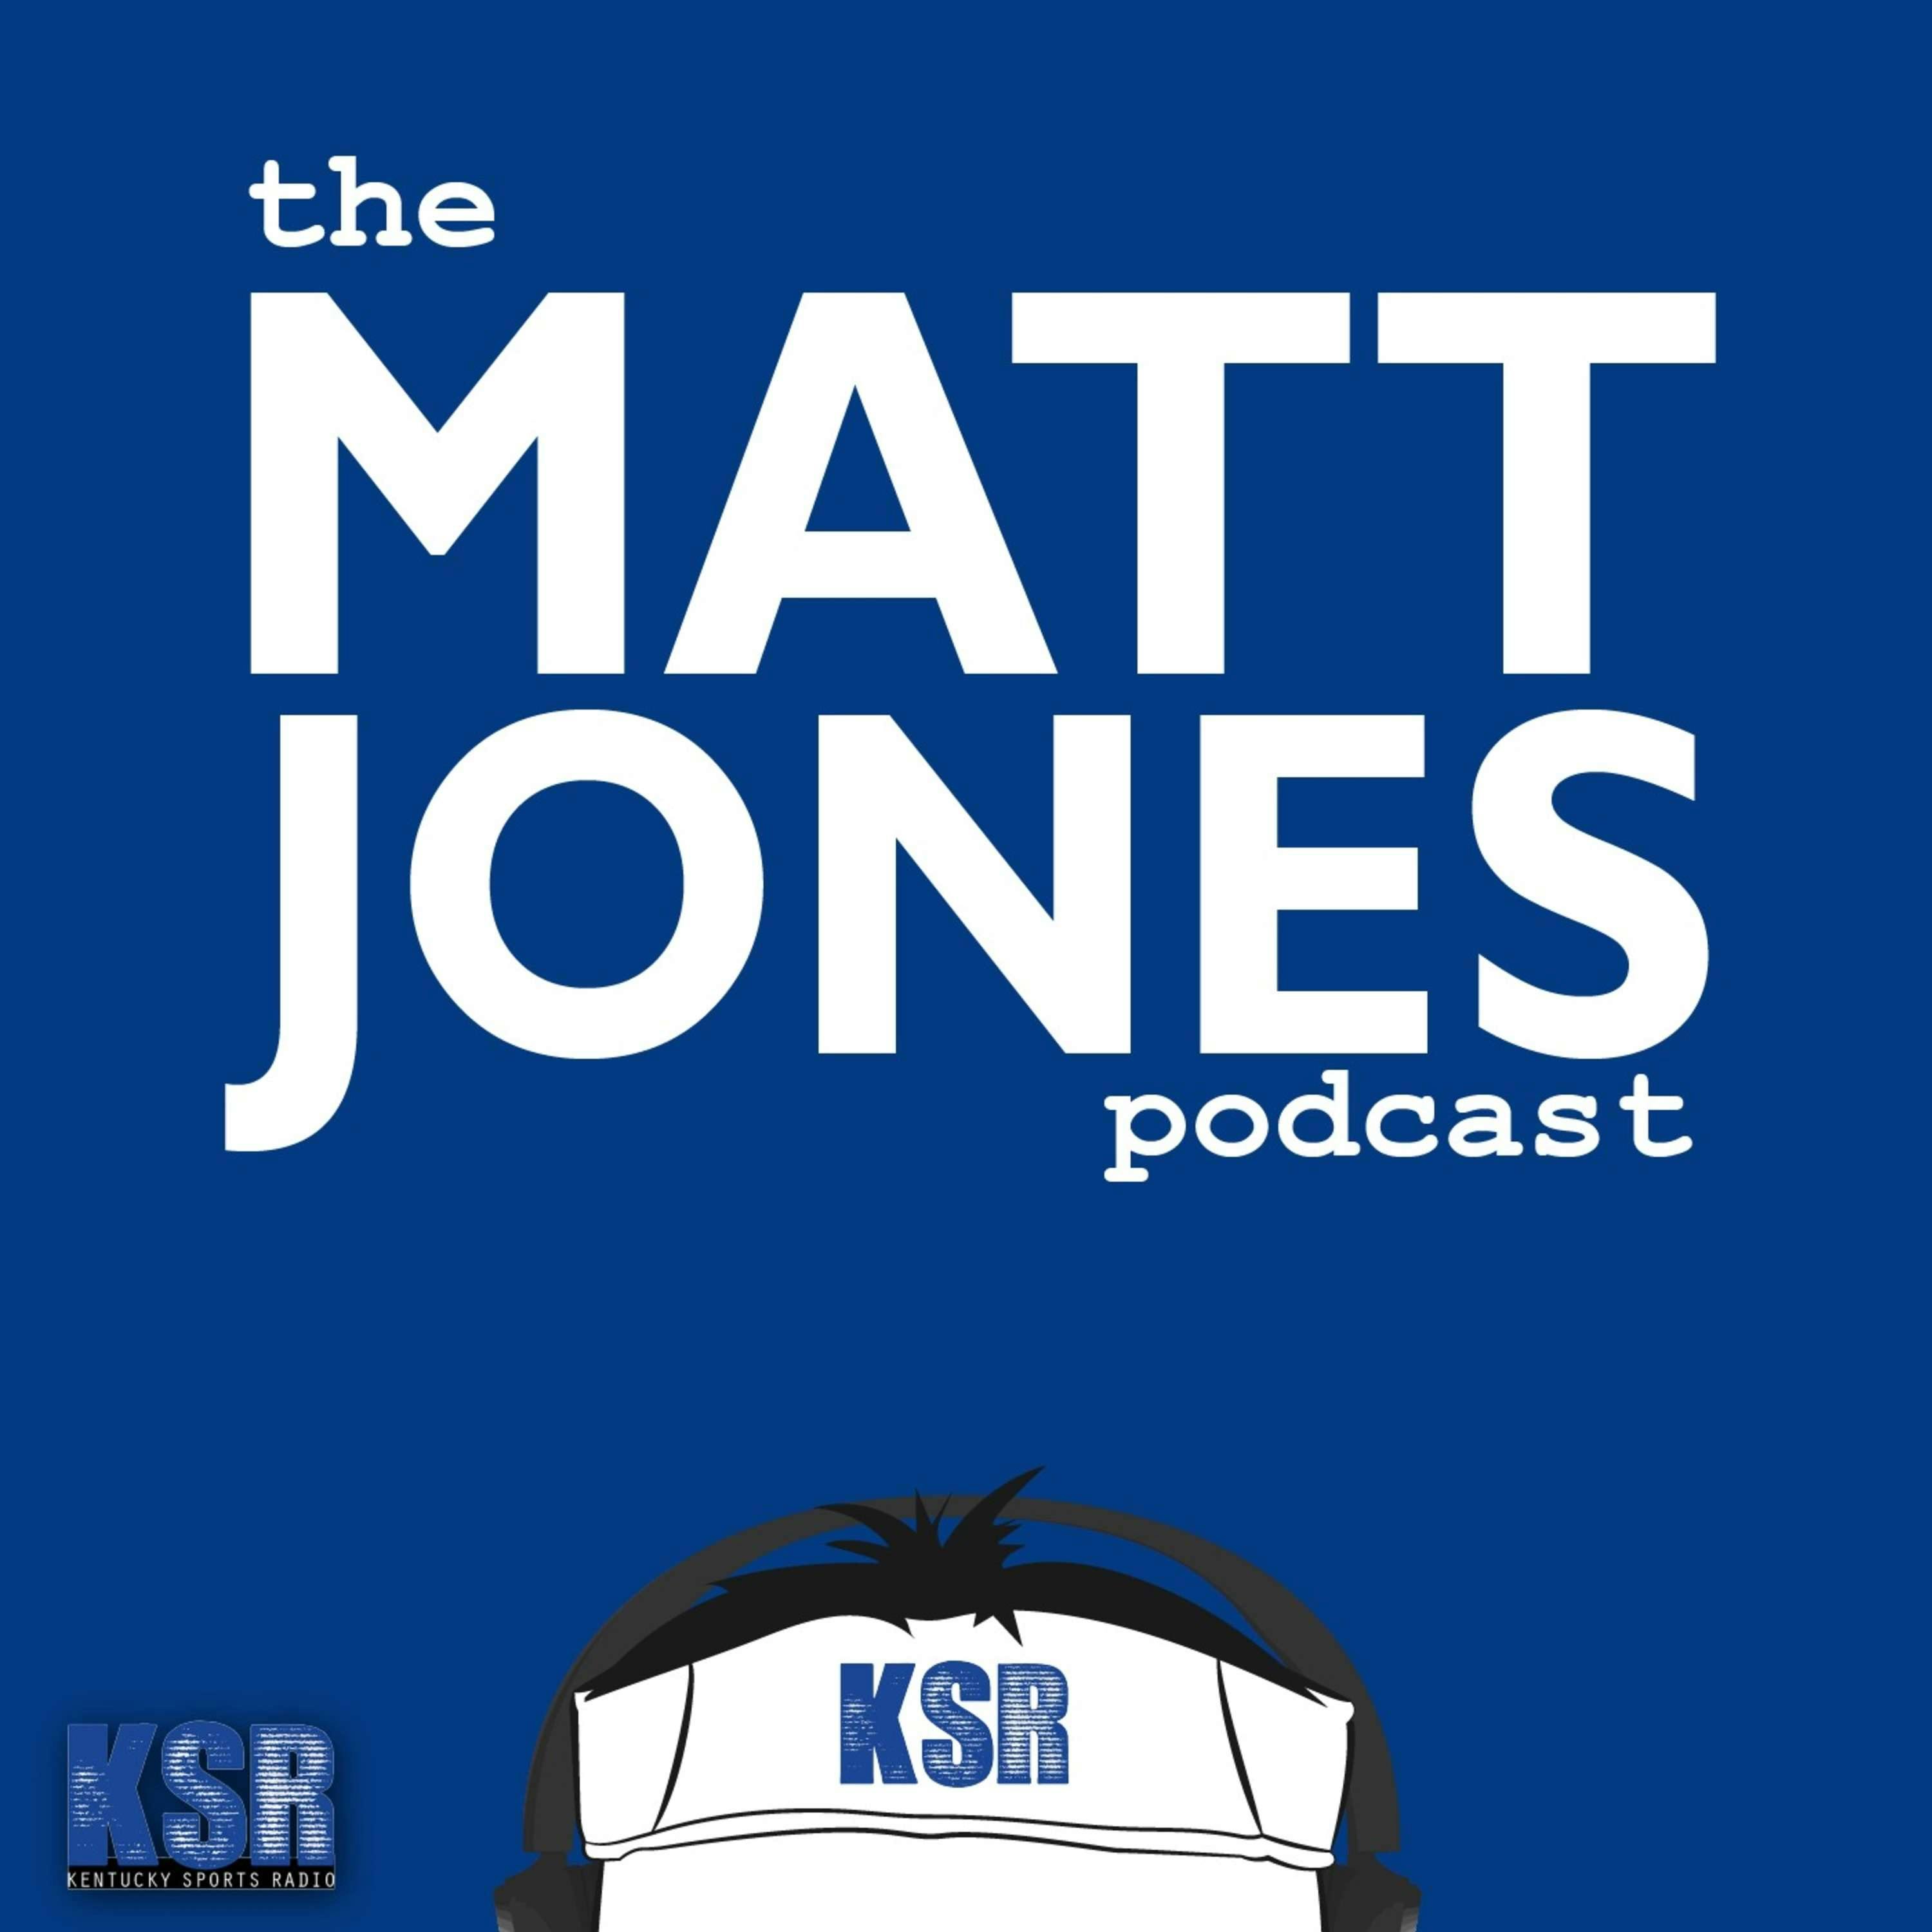 The Matt Jones Podcast: E54 Previewing the 2016 Football Season